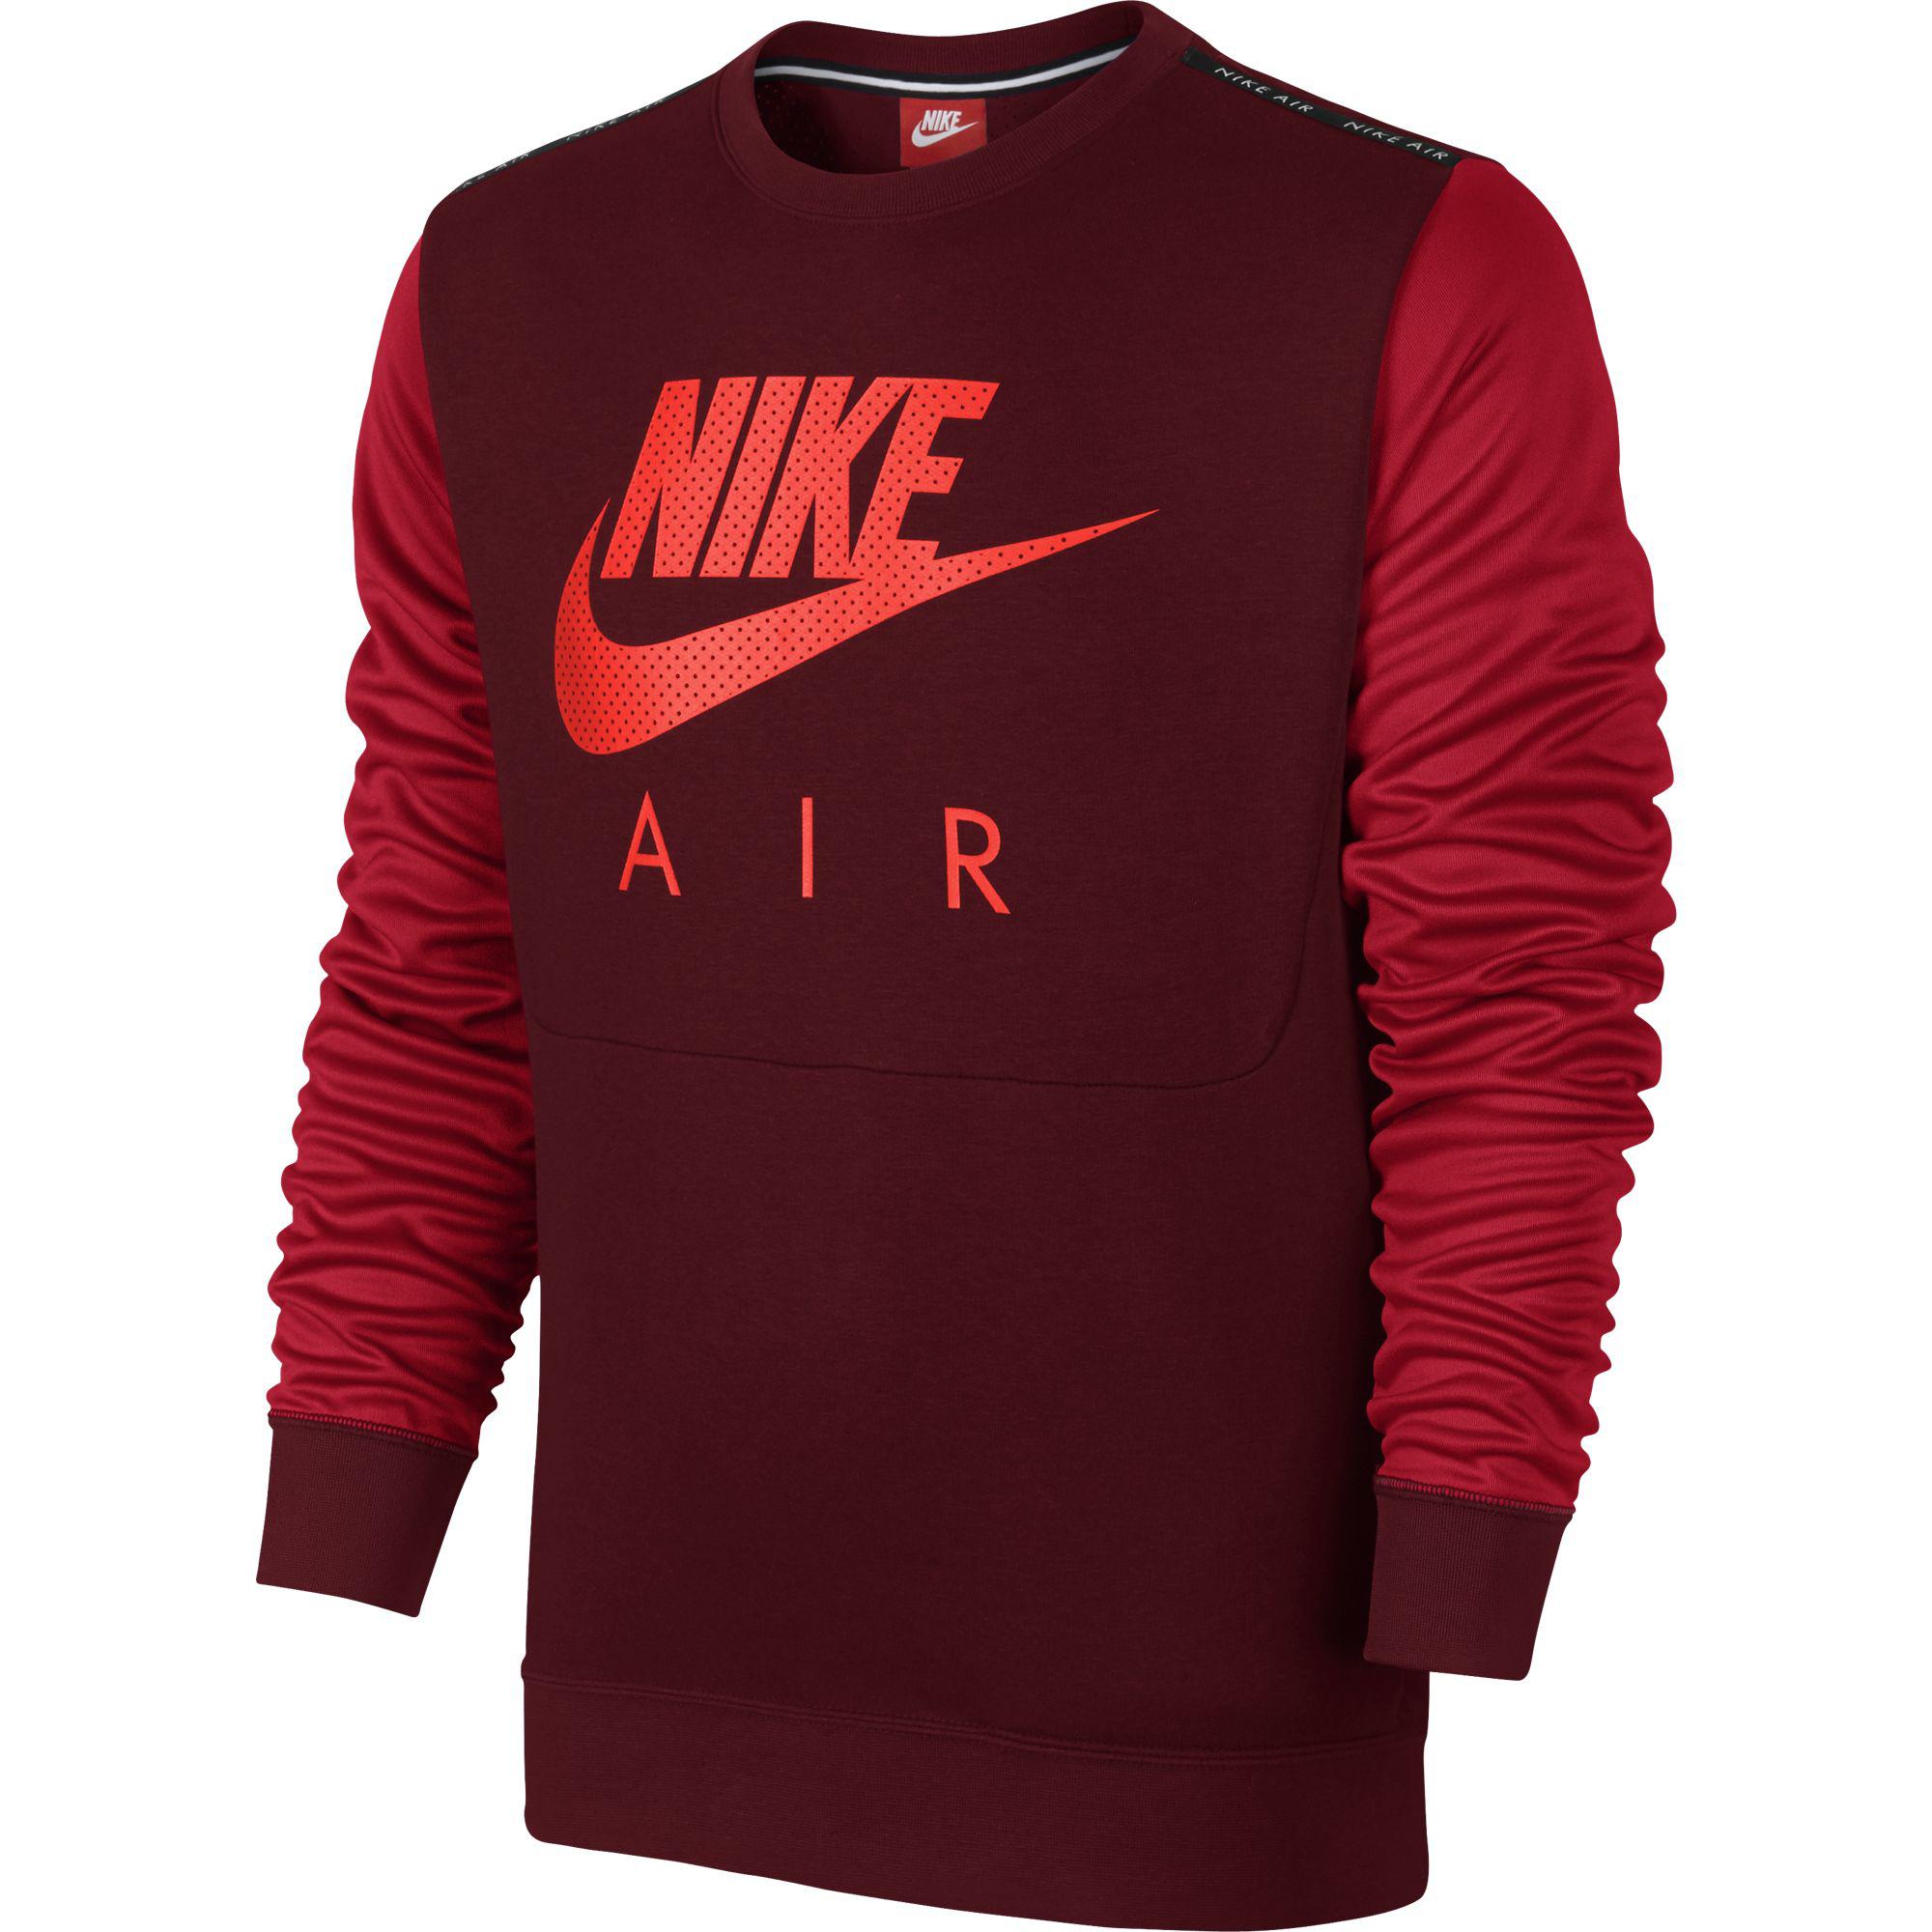 Mixed Red and Black Nike Logo - Nike Mens Air Hybrid Fleece Crew Long Sleeve Top - Red - Tennisnuts.com